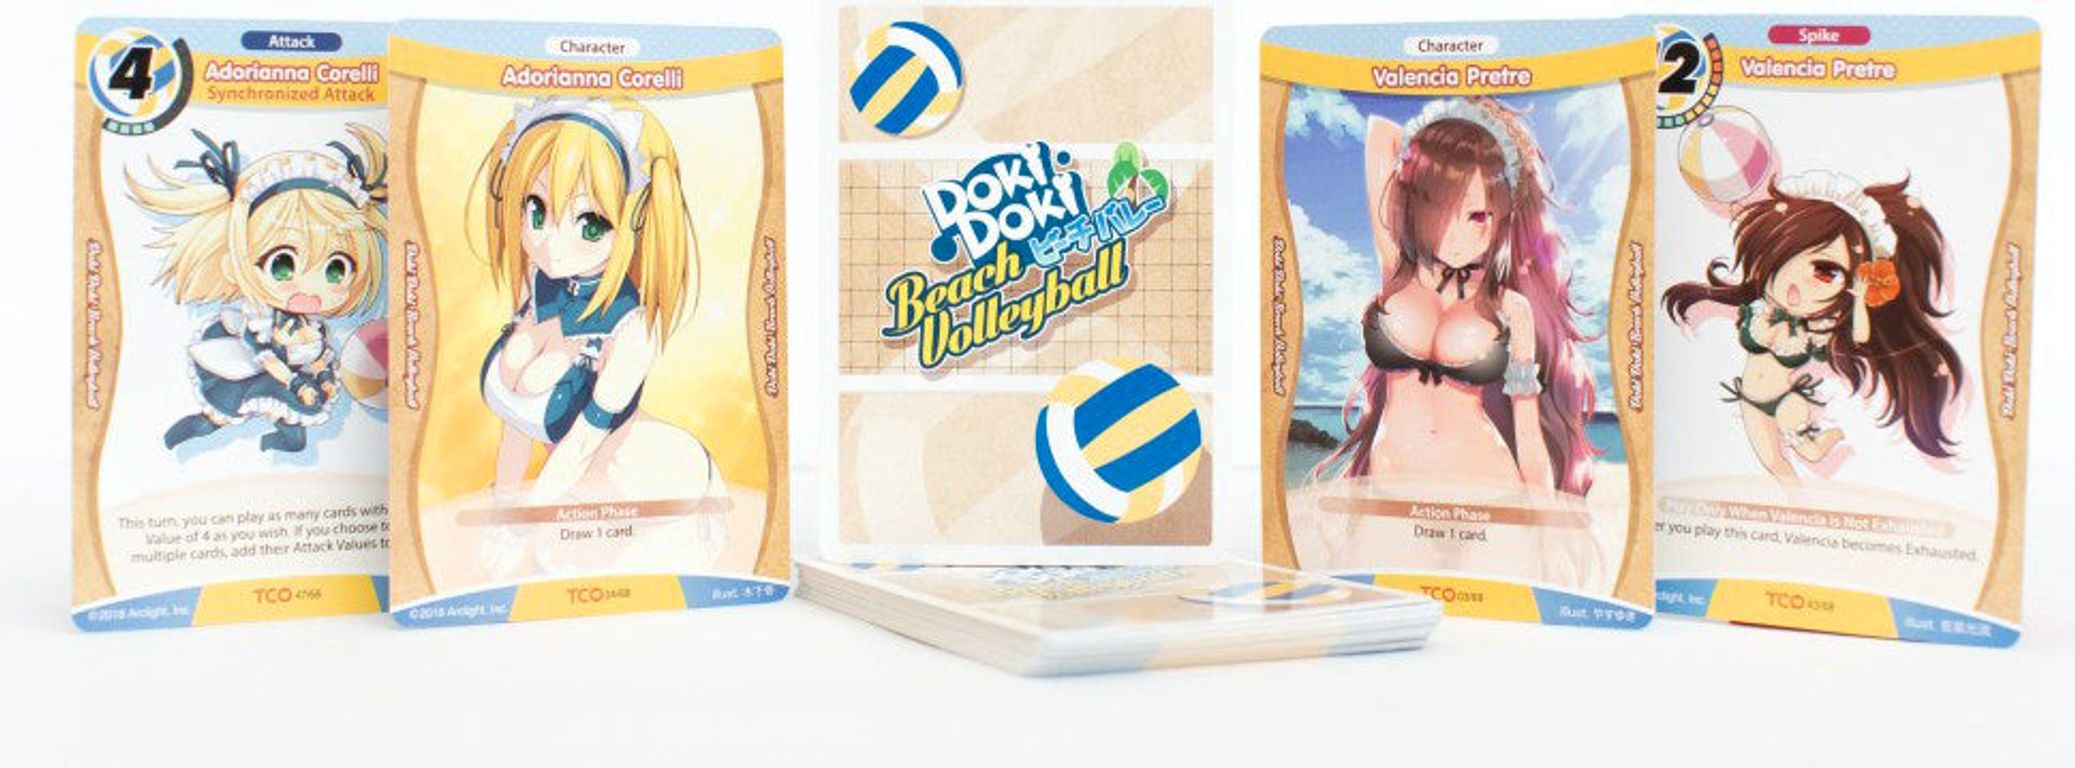 Tanto Cuore: Doki Doki Beach Volleyball cartas